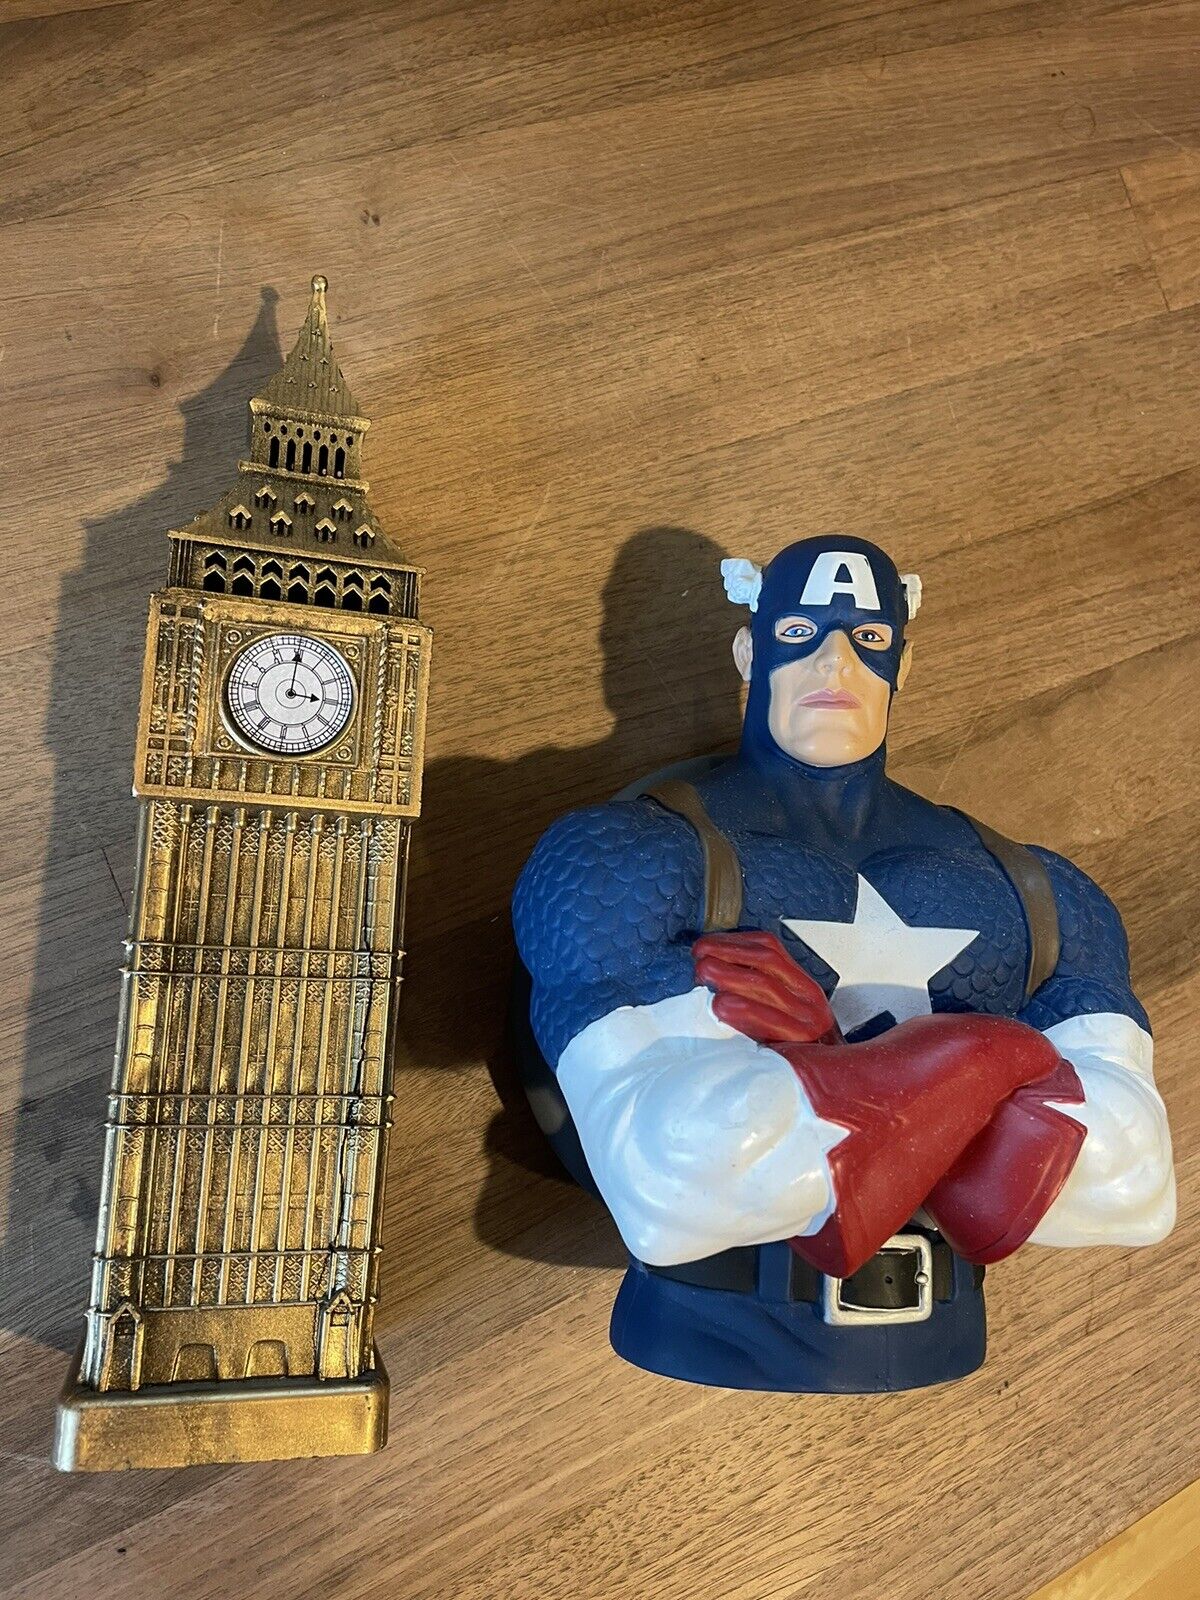 Marvel Avengers Captain America Bust Vinyl Coin Piggy Bank, Big Ben England Lot